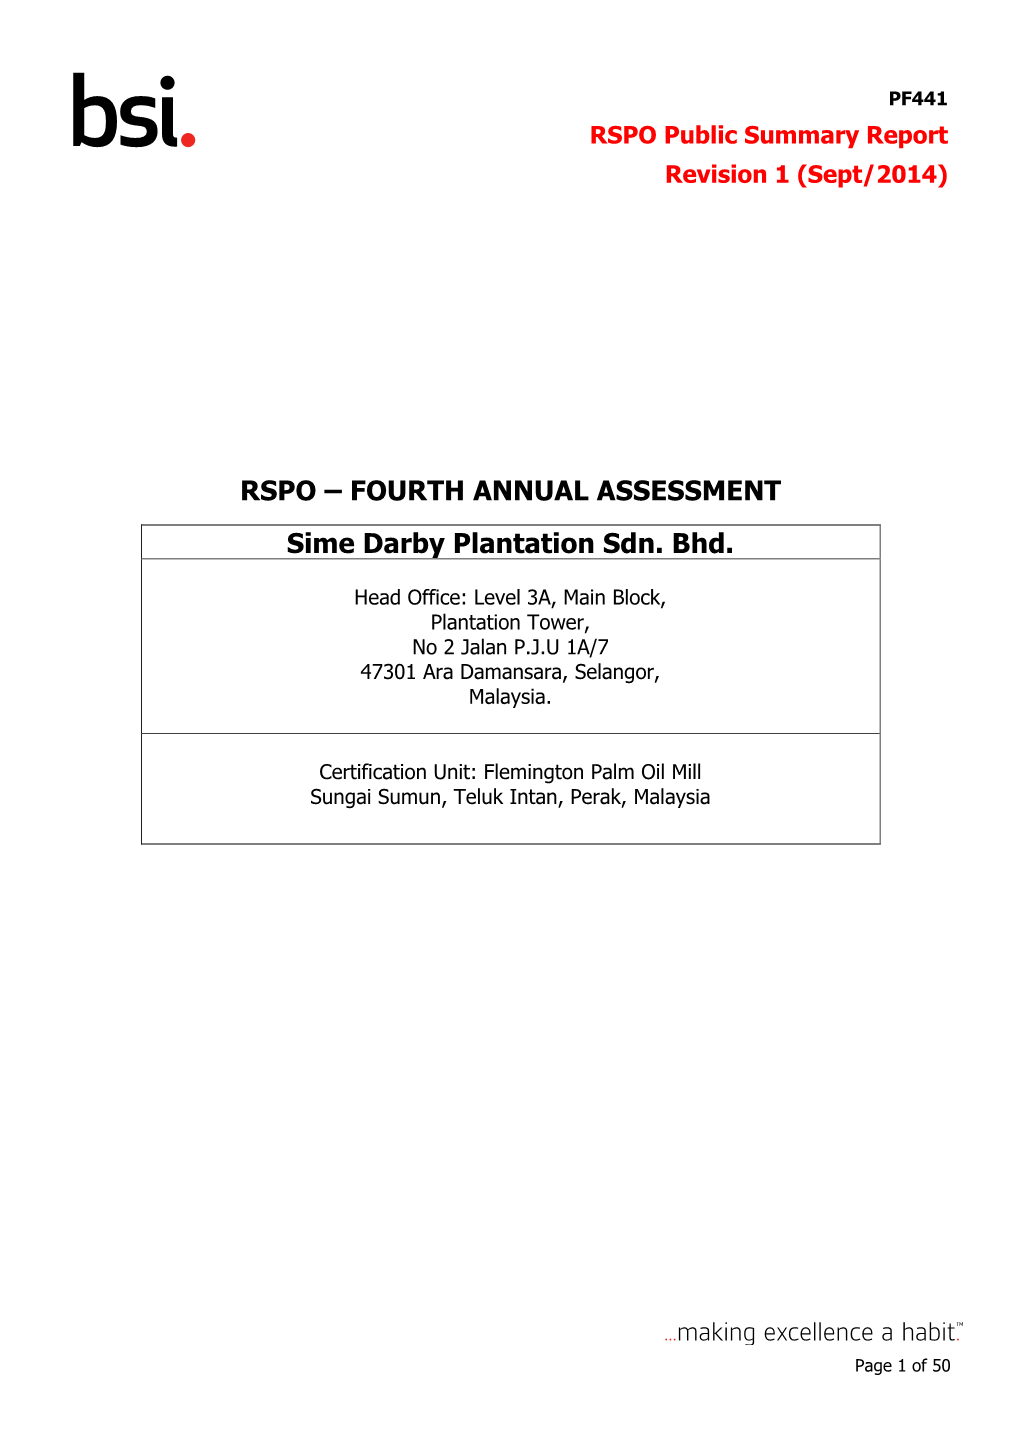 FOURTH ANNUAL ASSESSMENT Sime Darby Plantation Sdn. Bhd